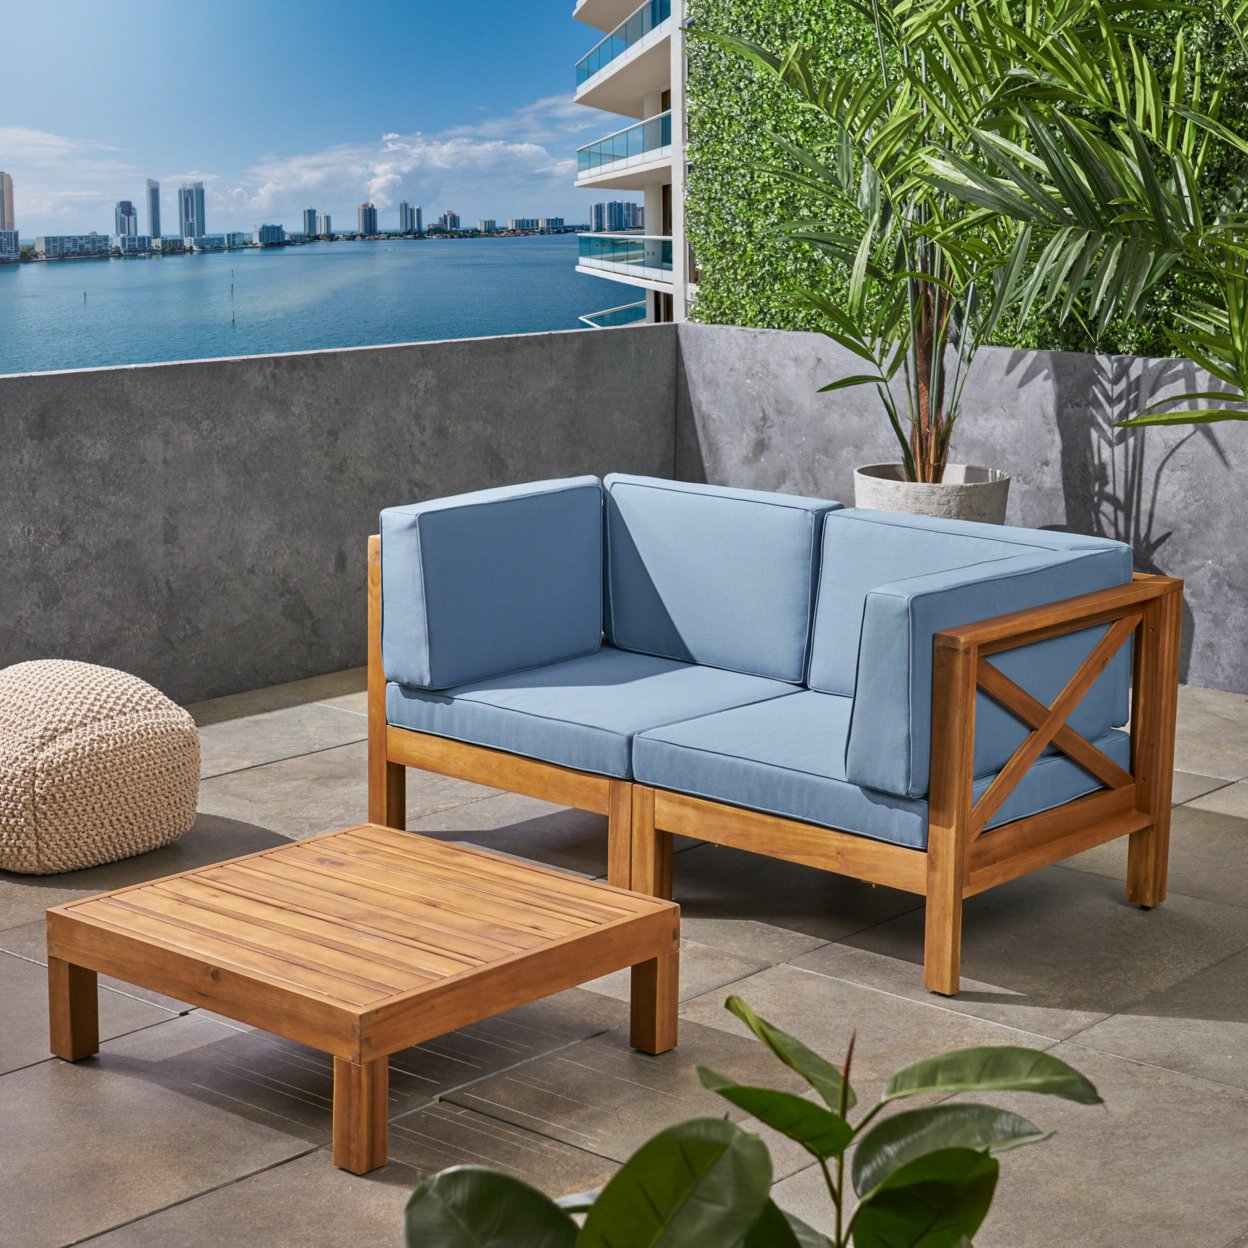 Brava Outdoor Modular Acacia Wood Sofa With Cushions And Coffee Table Set - Teak Finish + Blue